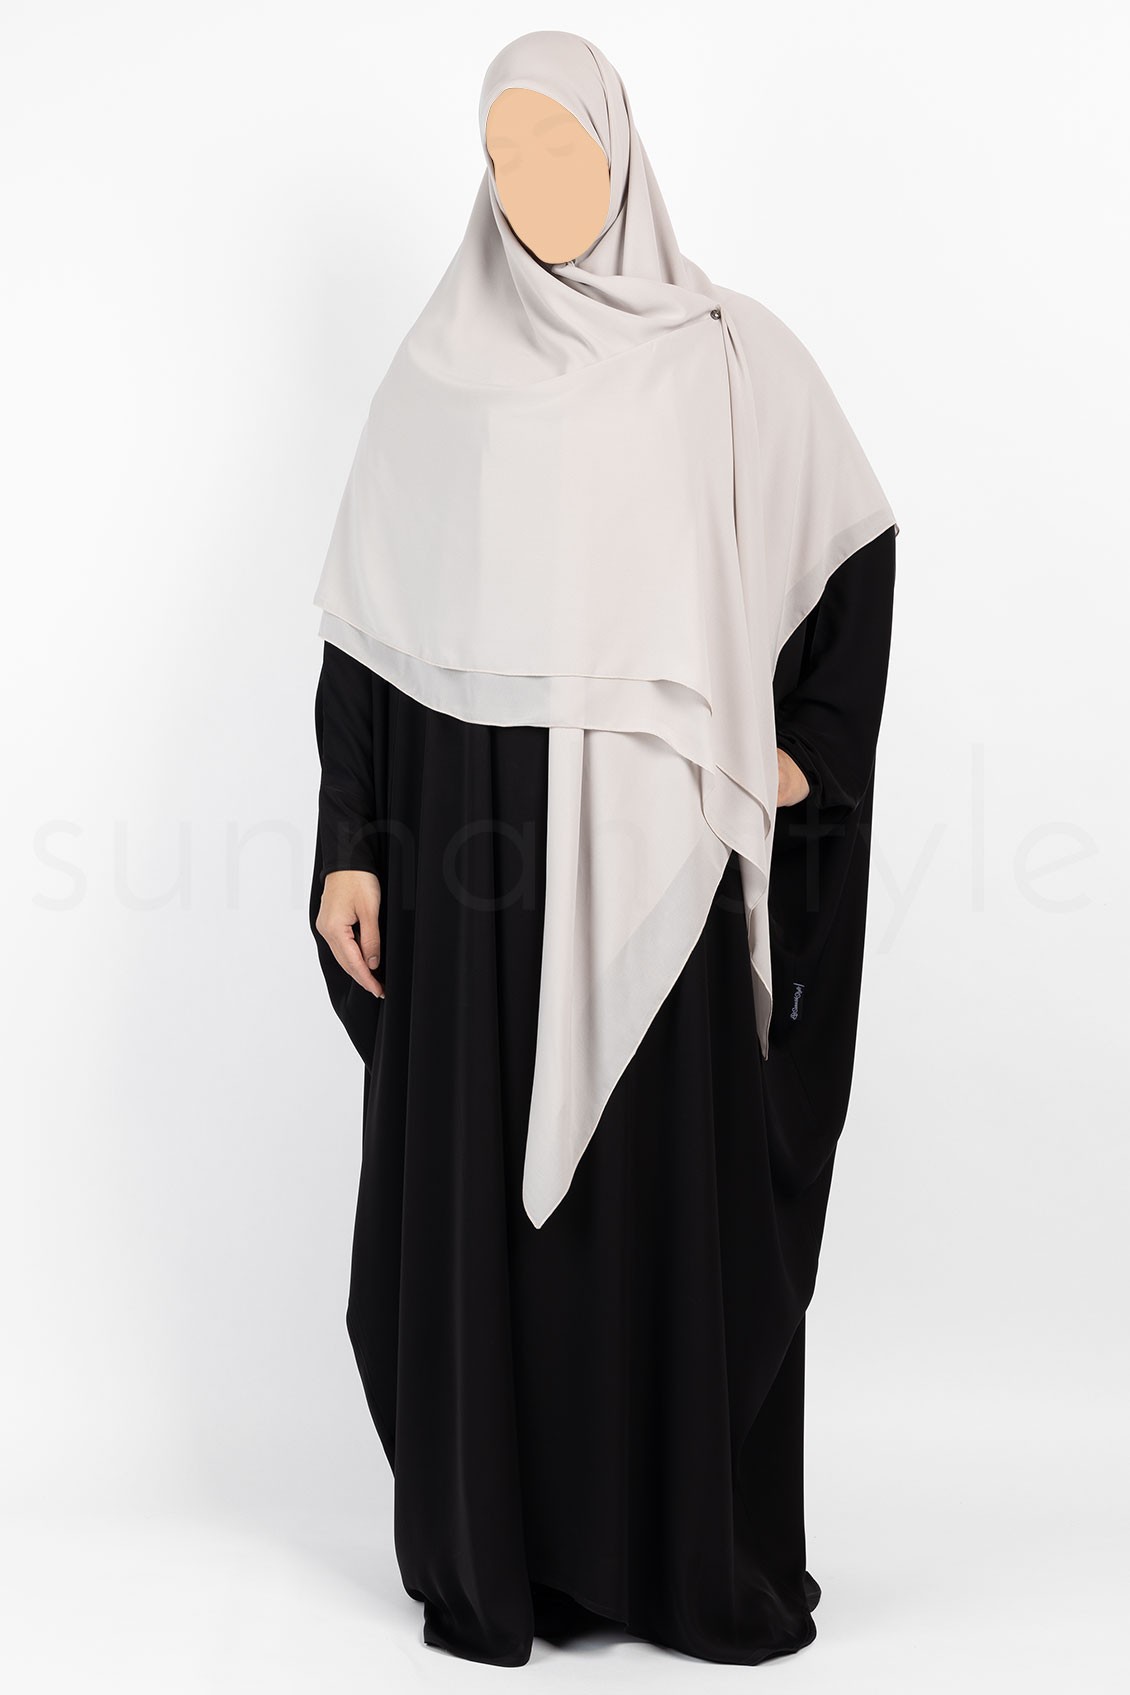 Sunnah Style Essentials Square Hijab XL Smoke